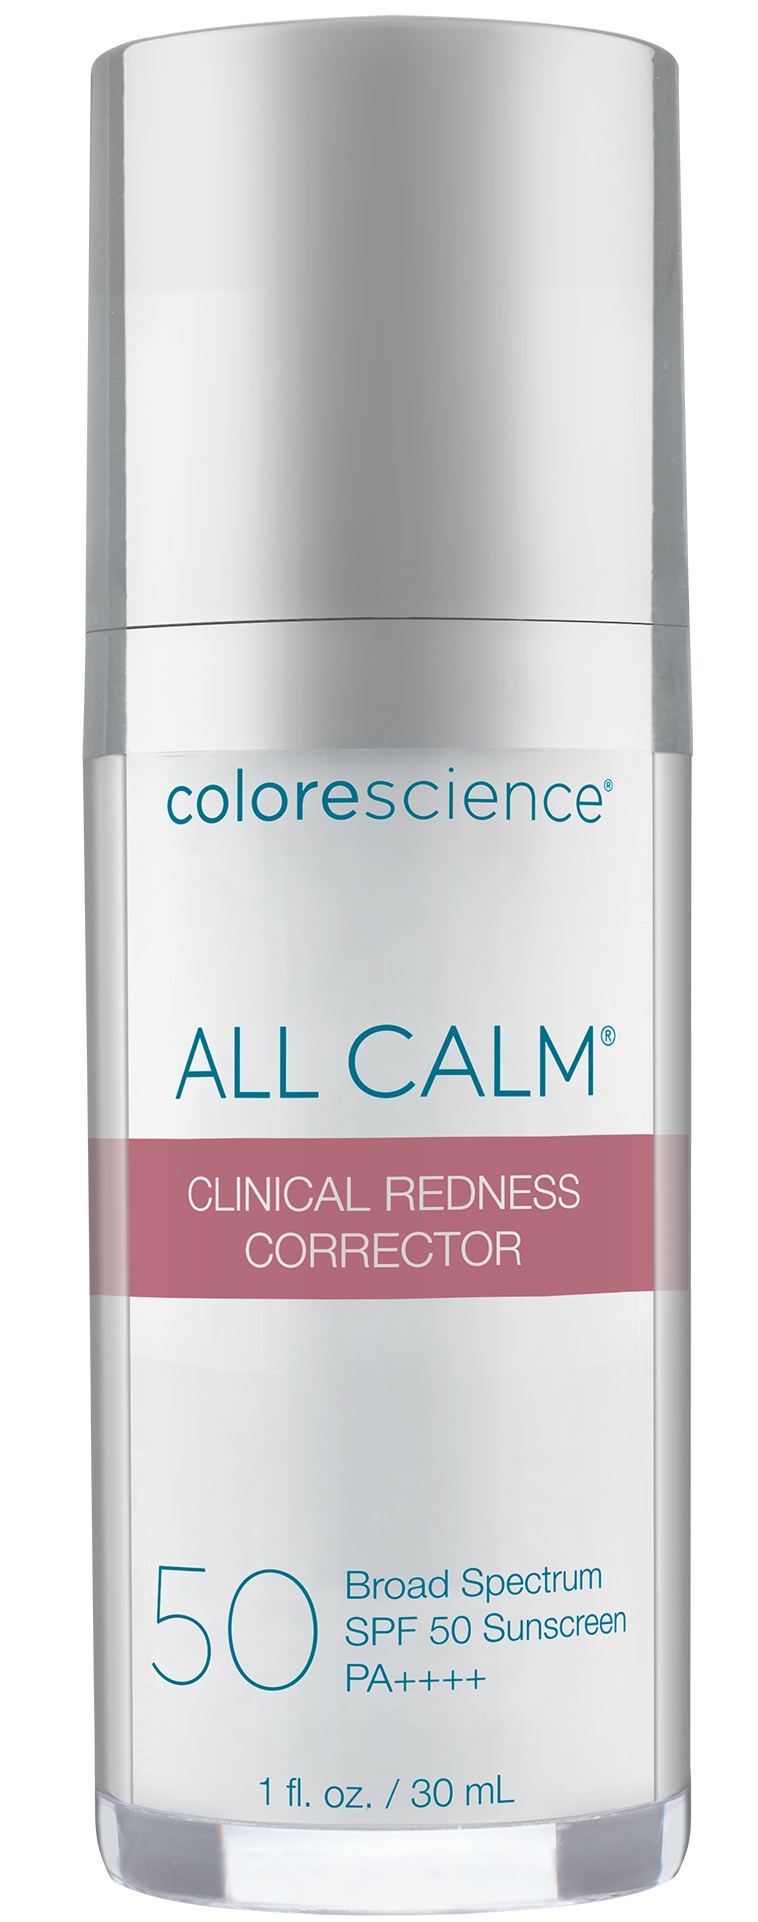 Colorescience All Calm Clinical Redness Corrector SPF 50